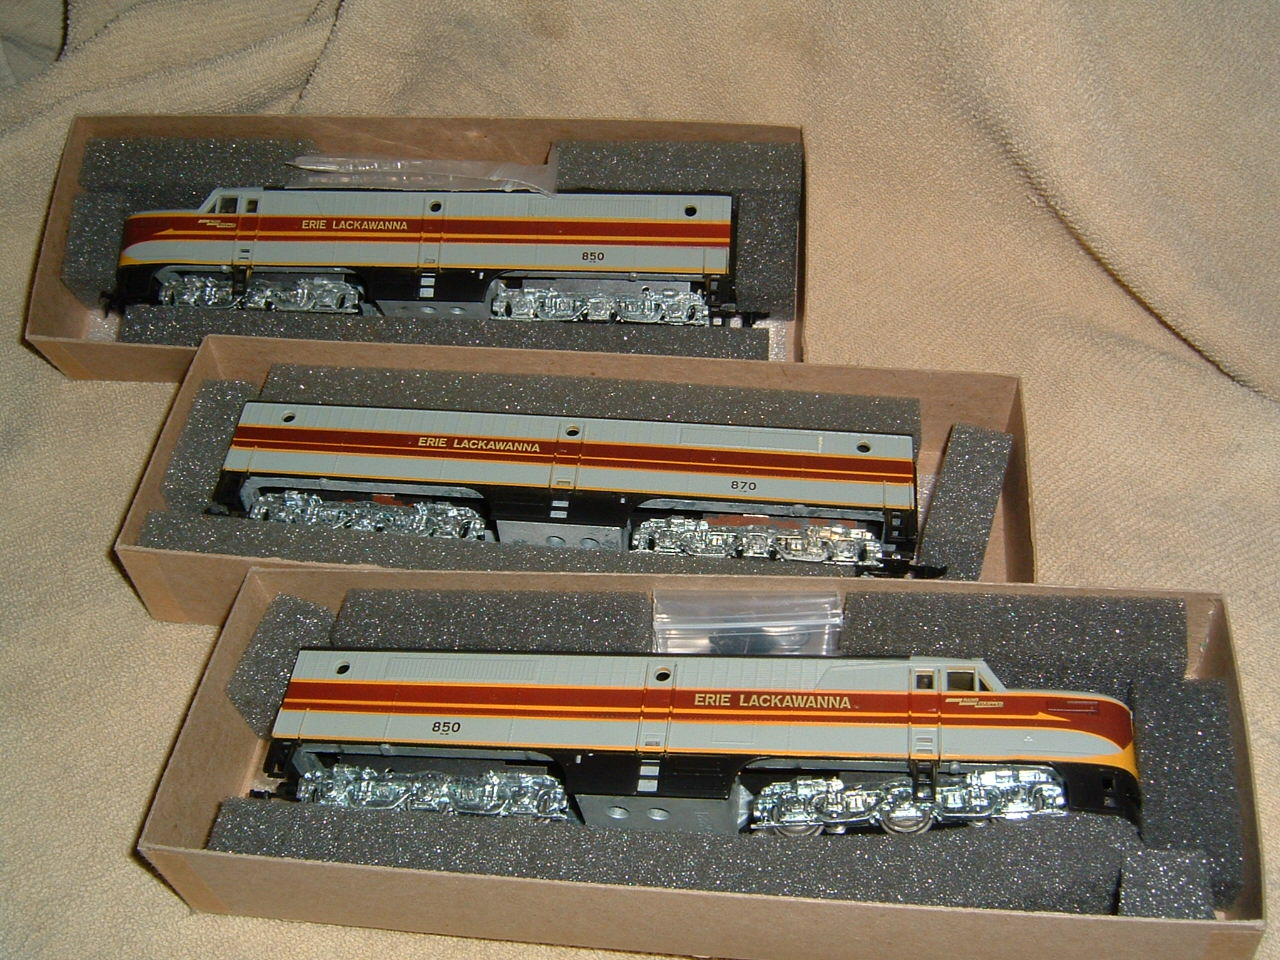 Tyco Trains